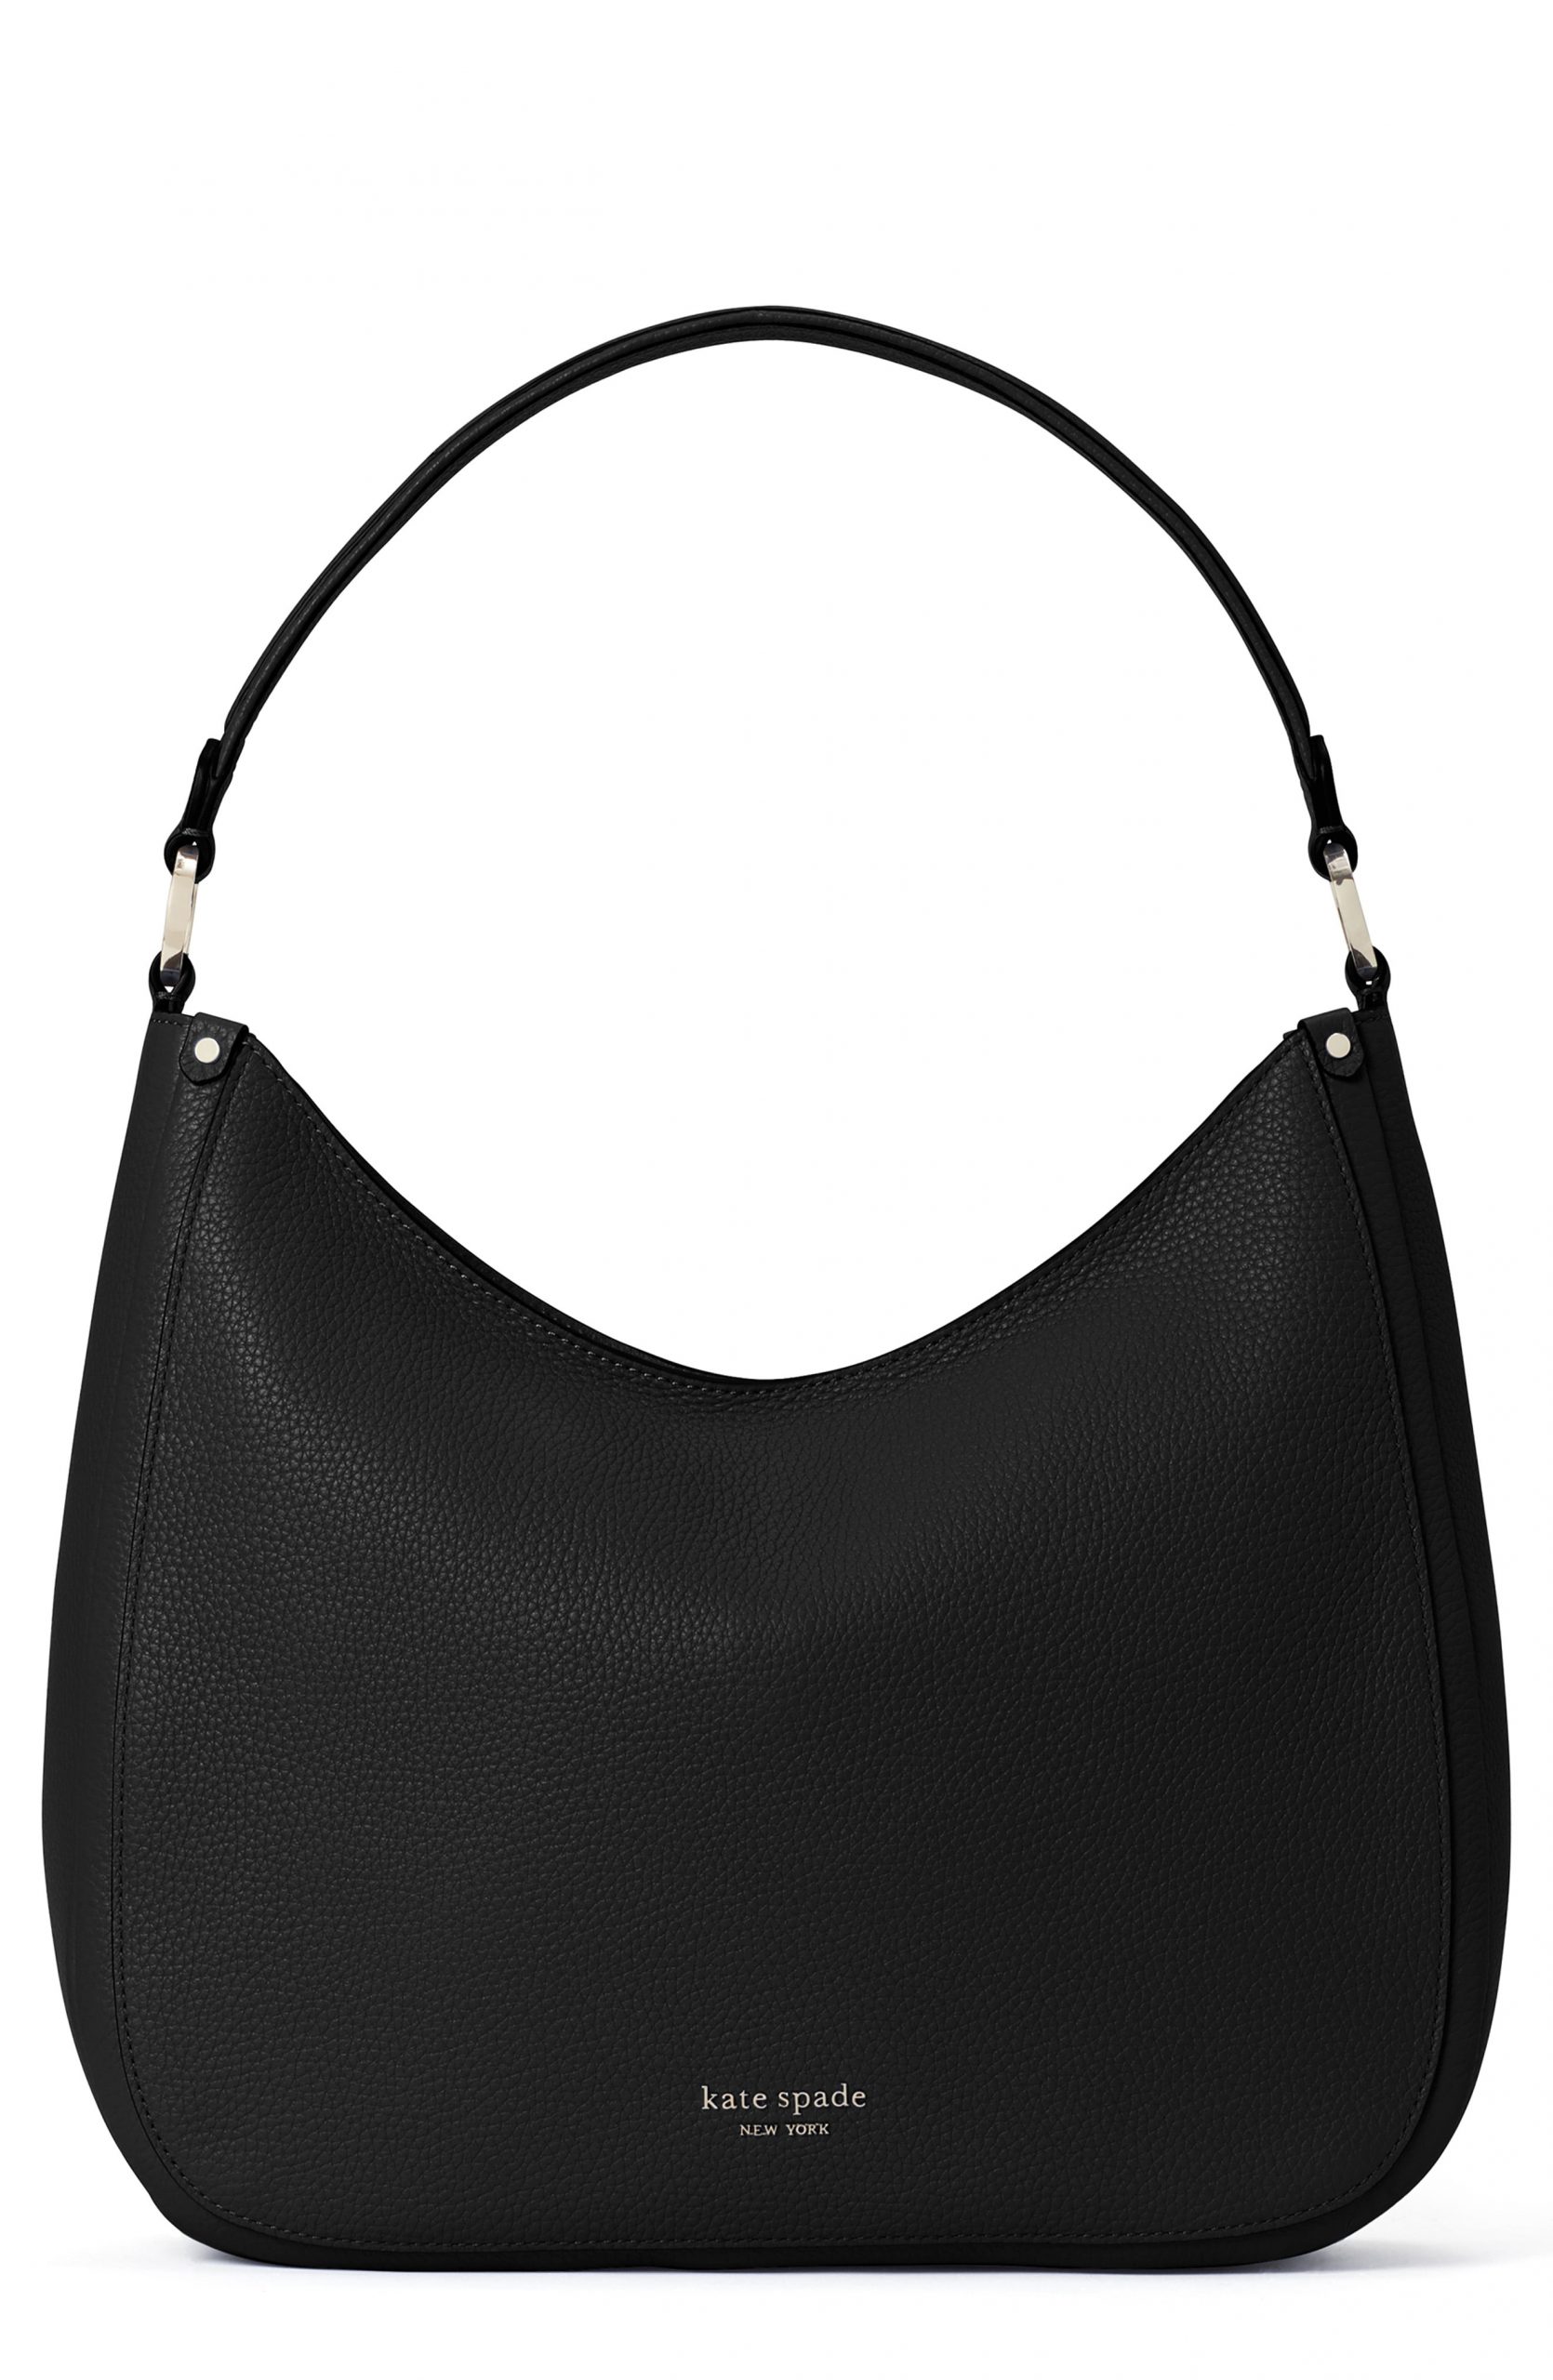 Kate Spade New York Roulette Large Leather Hobo Bag - Black | Fashion ...